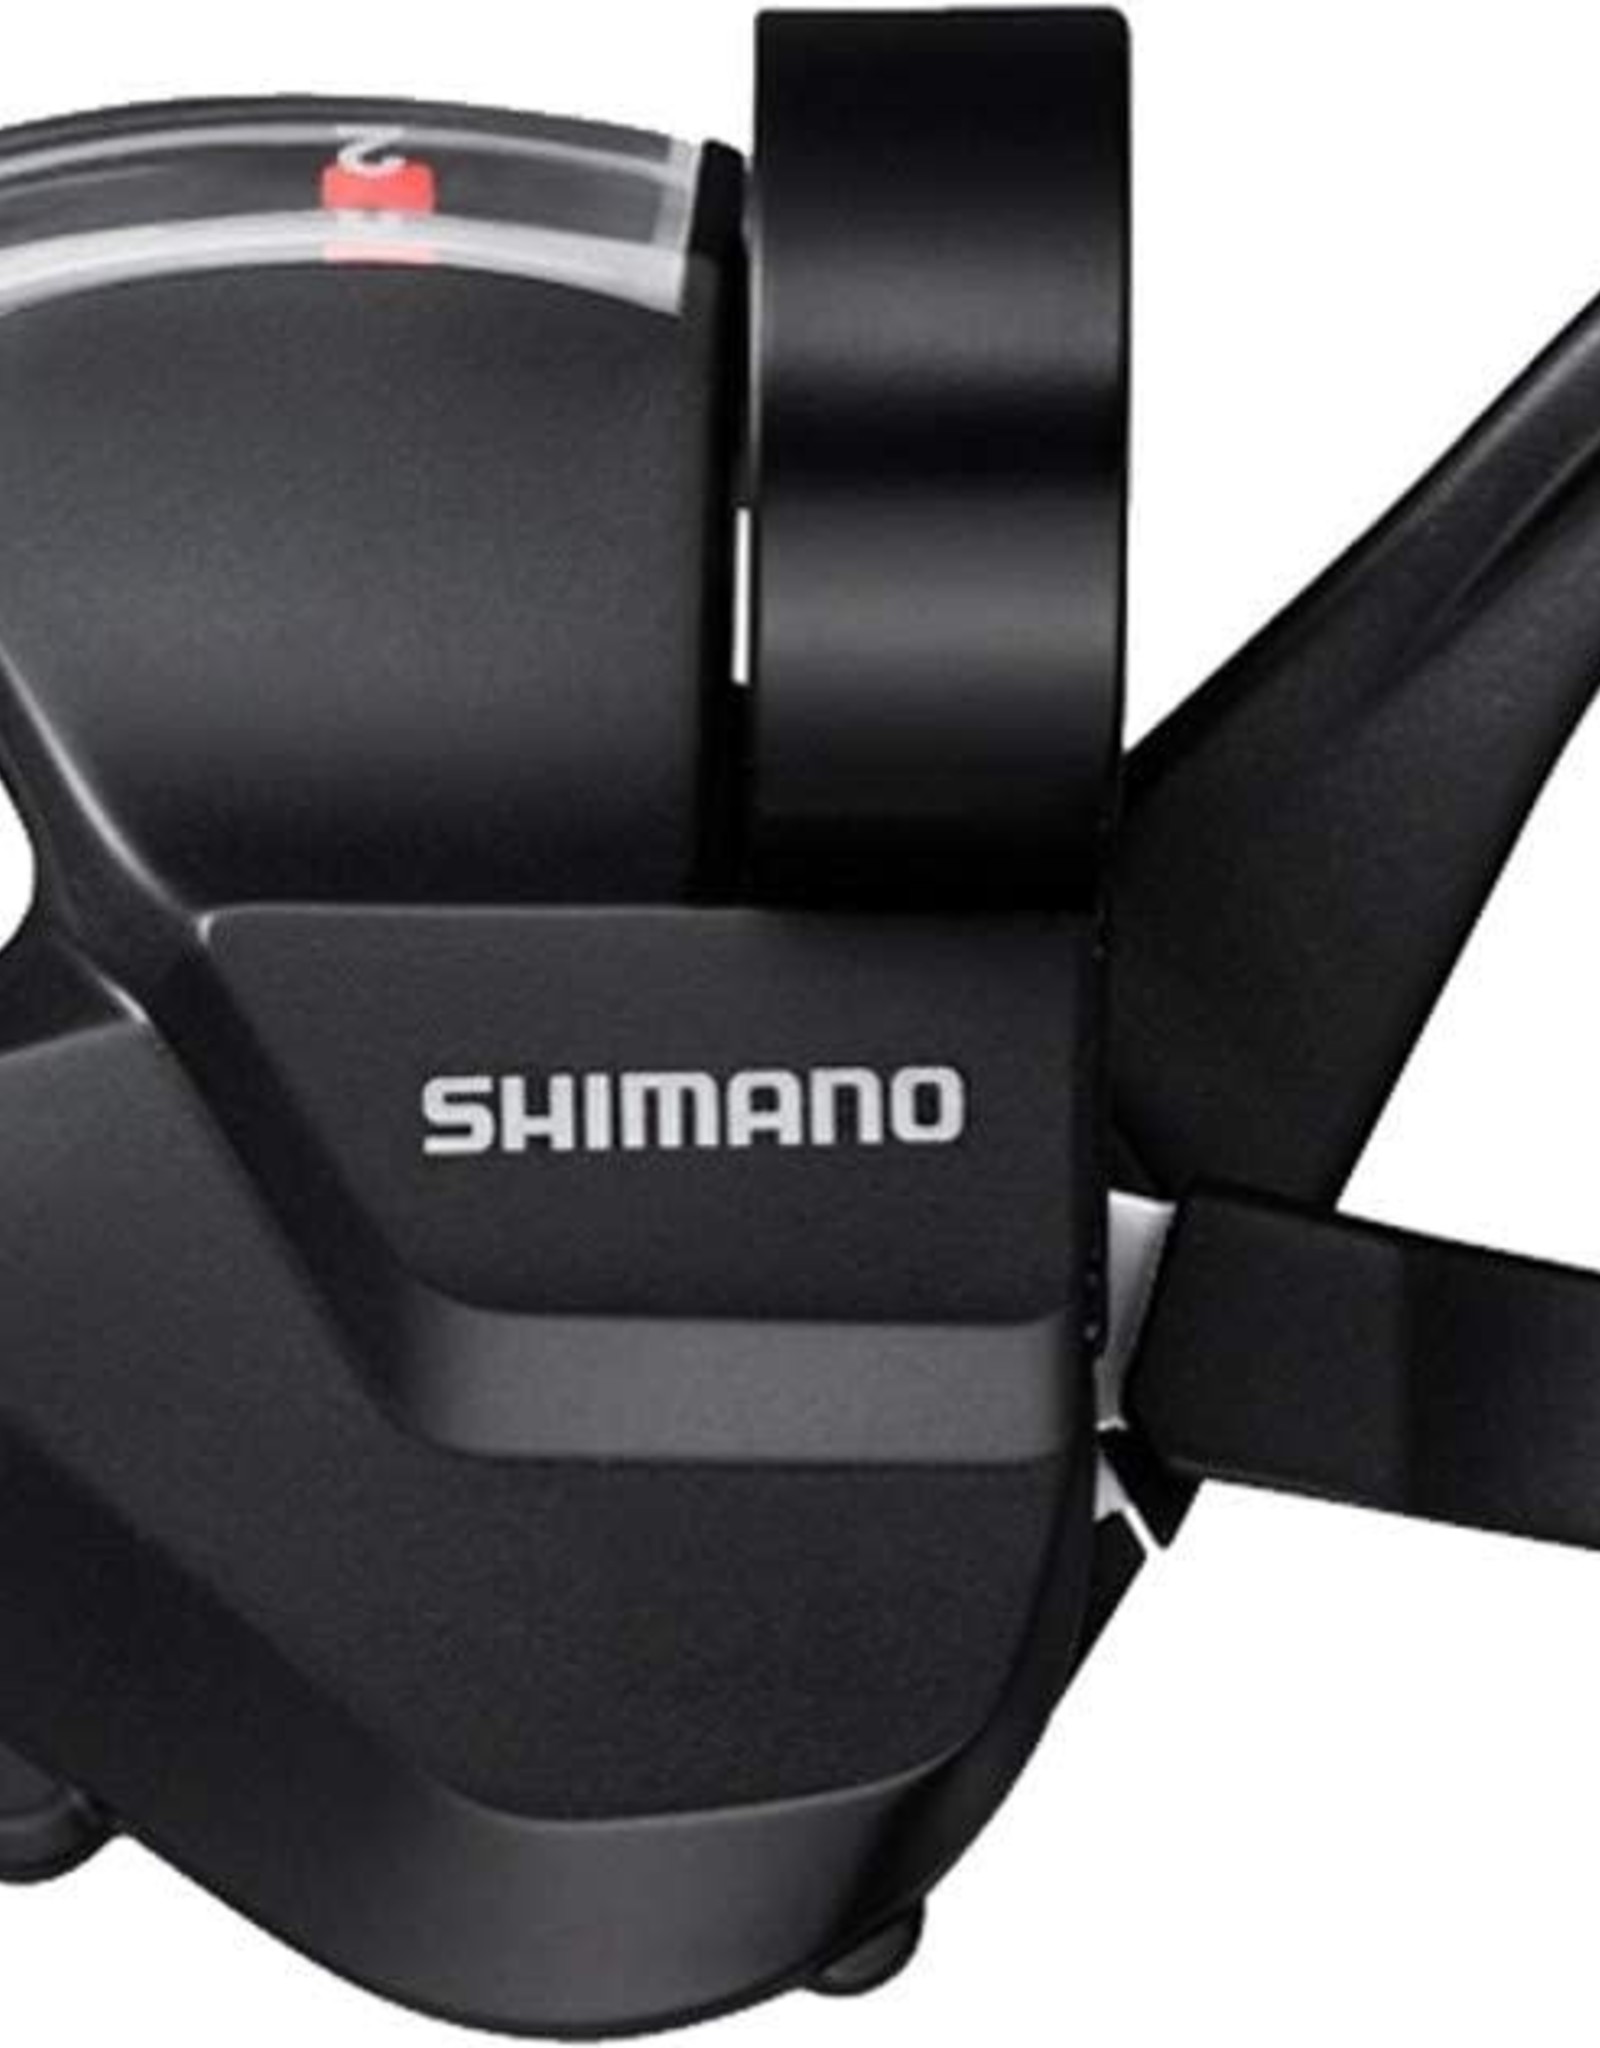 Shimano Shimano Alivio SL-M3100-L Shifter - Left, 3-Speed, RapidFire Plus, Optical Gear Display